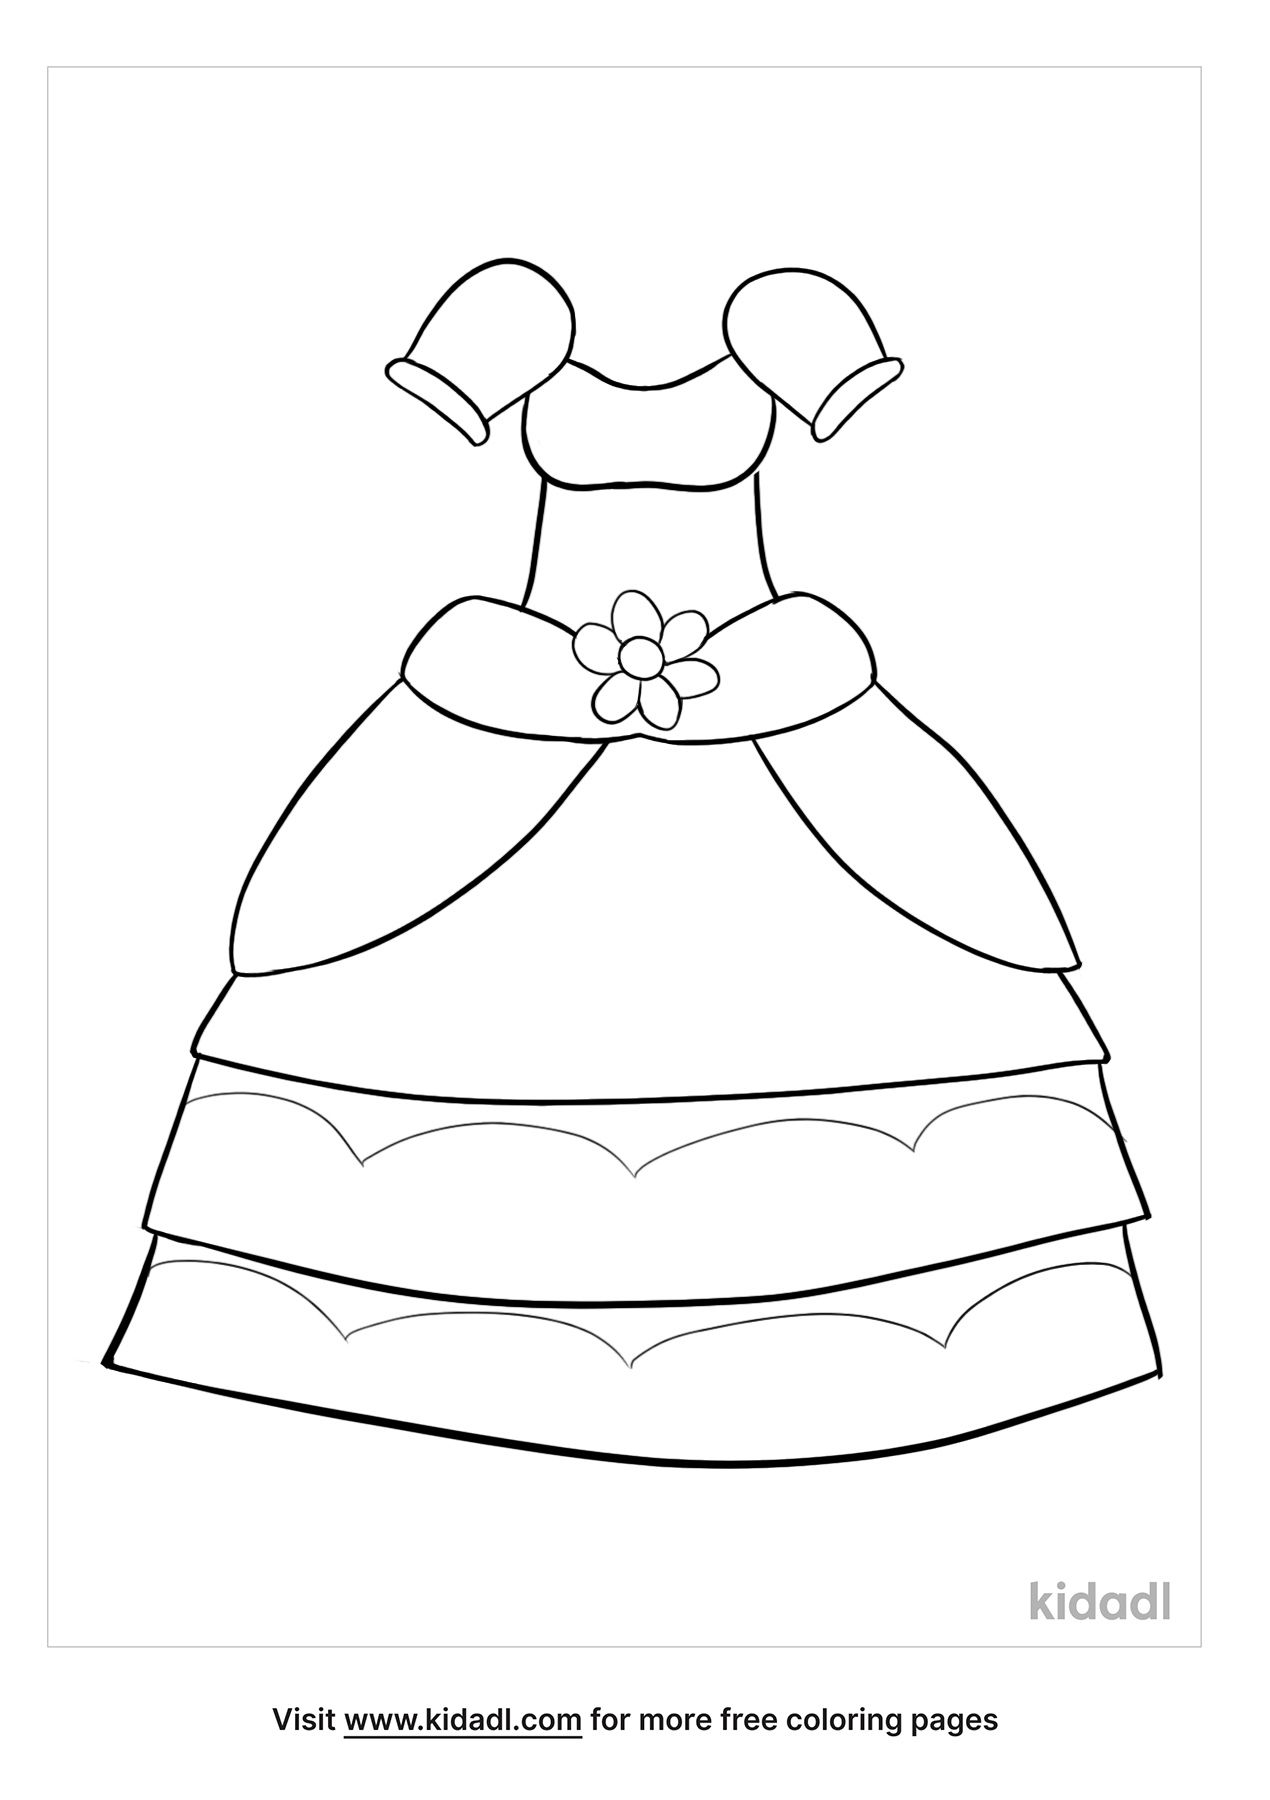 Princess Dresses Coloring Pages | Free Princess Coloring Pages | Kidadl